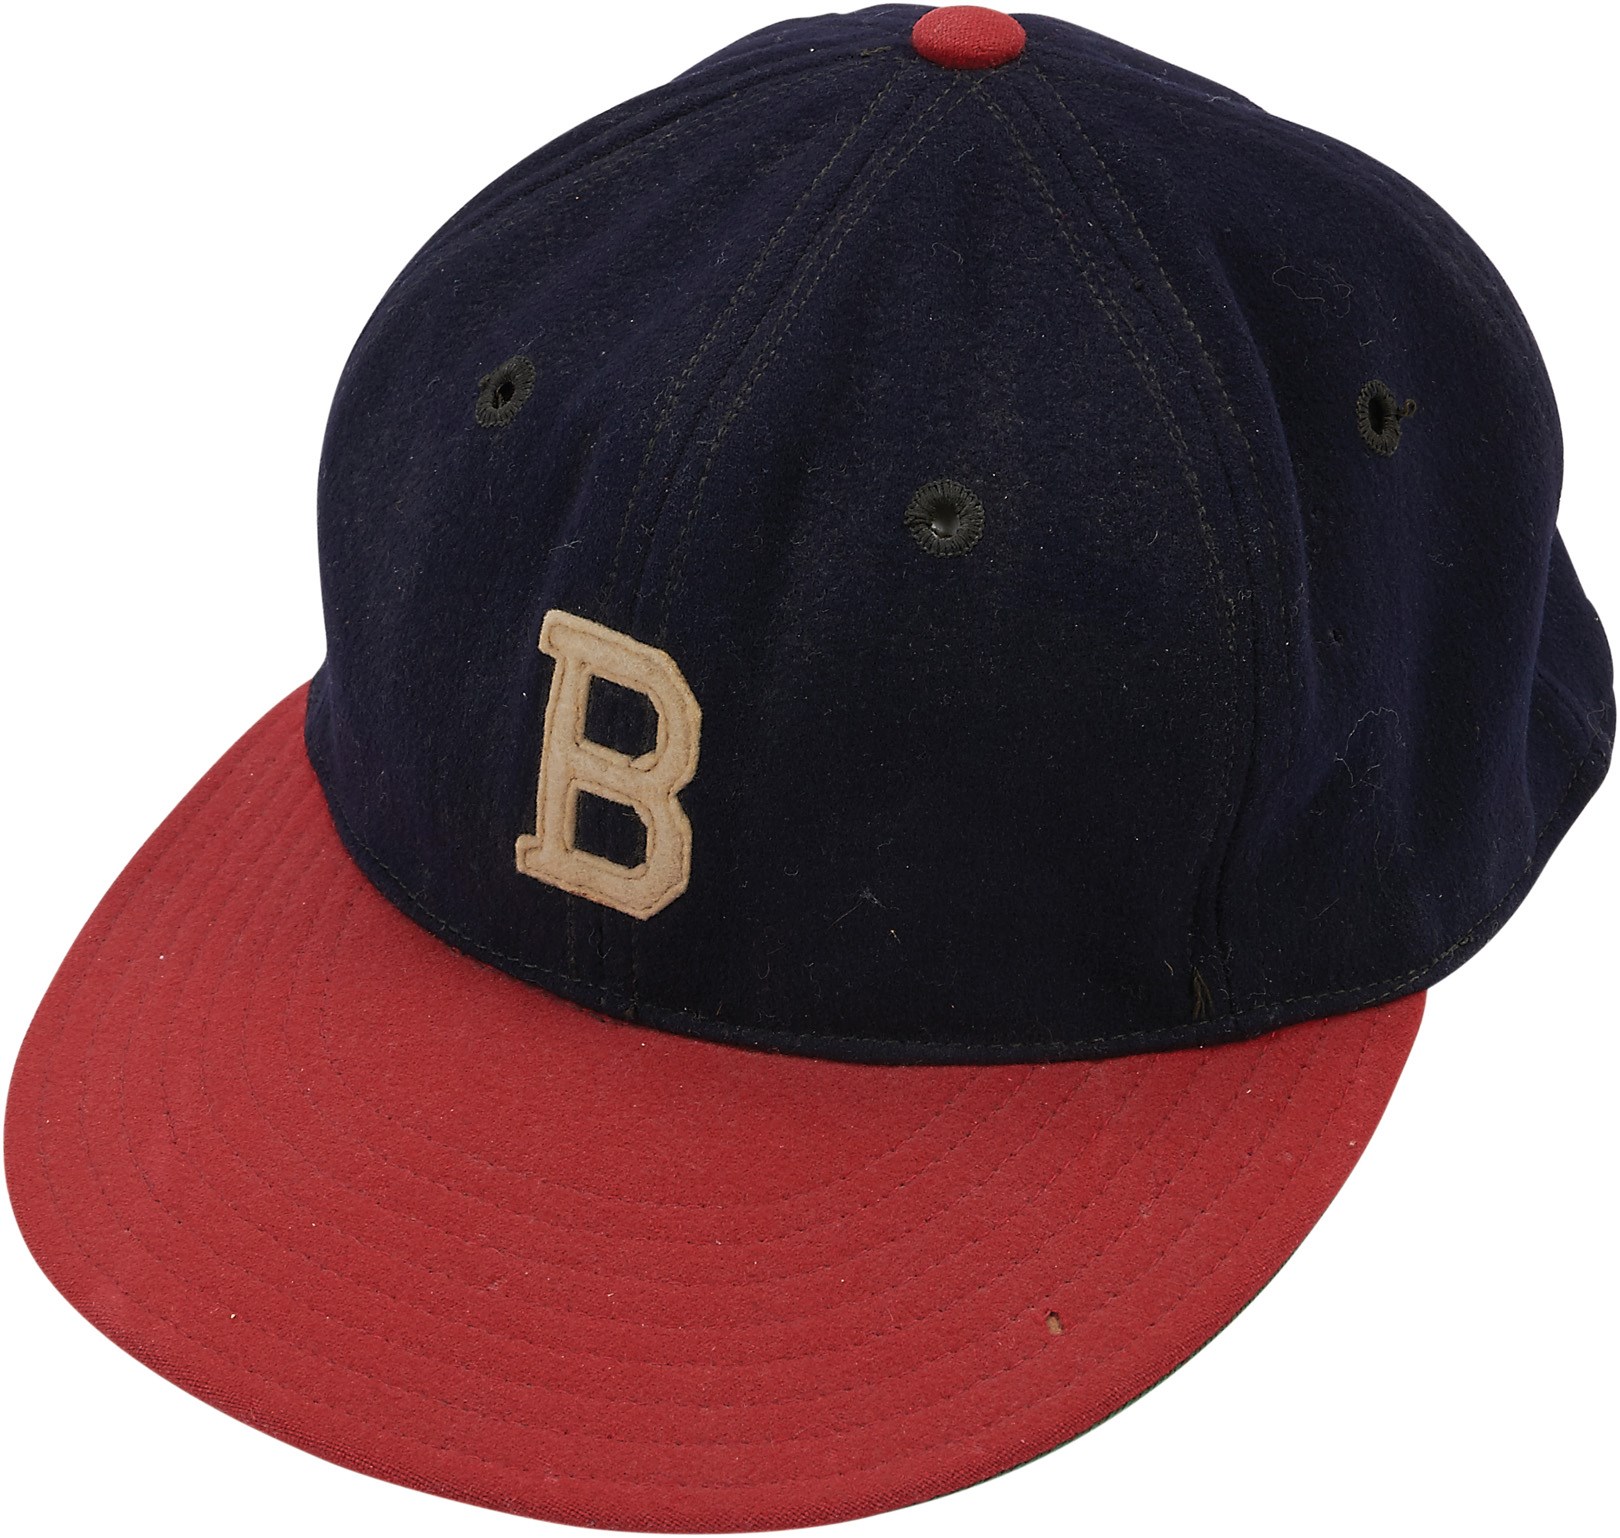 - Circa 1948 Sibby Sisti Boston Braves Game Used Cap